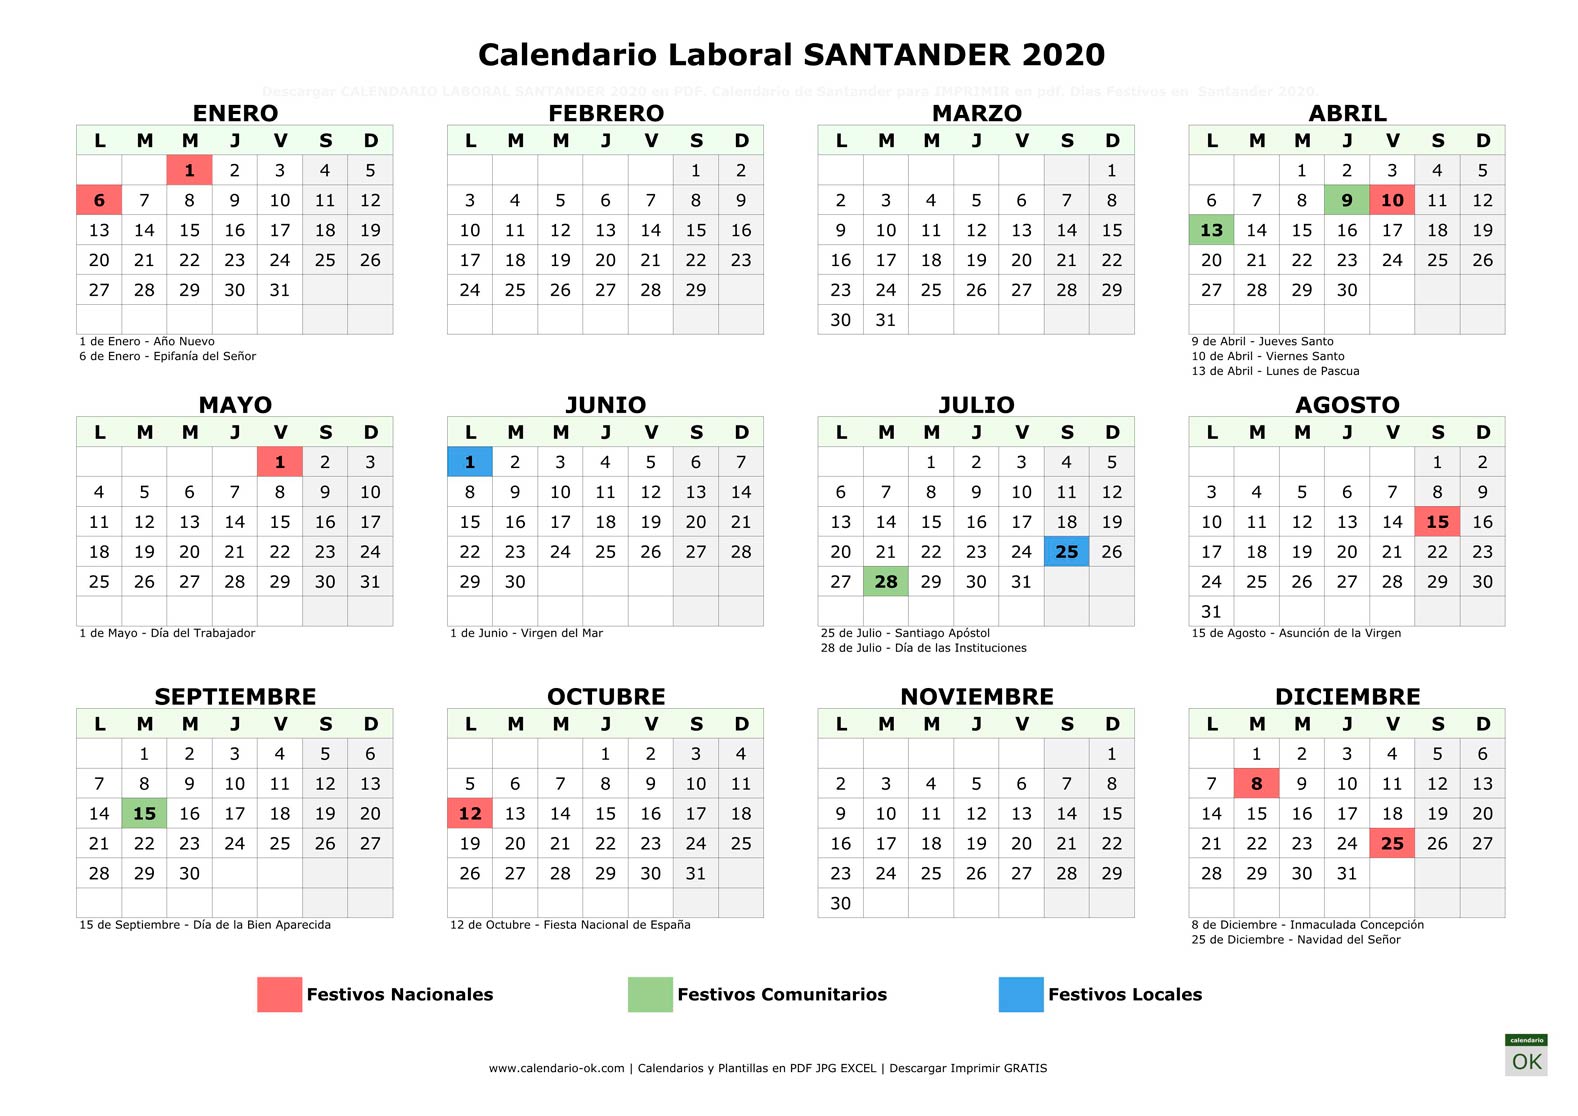 Calendario Laboral SANTANDER 2020 horizontal